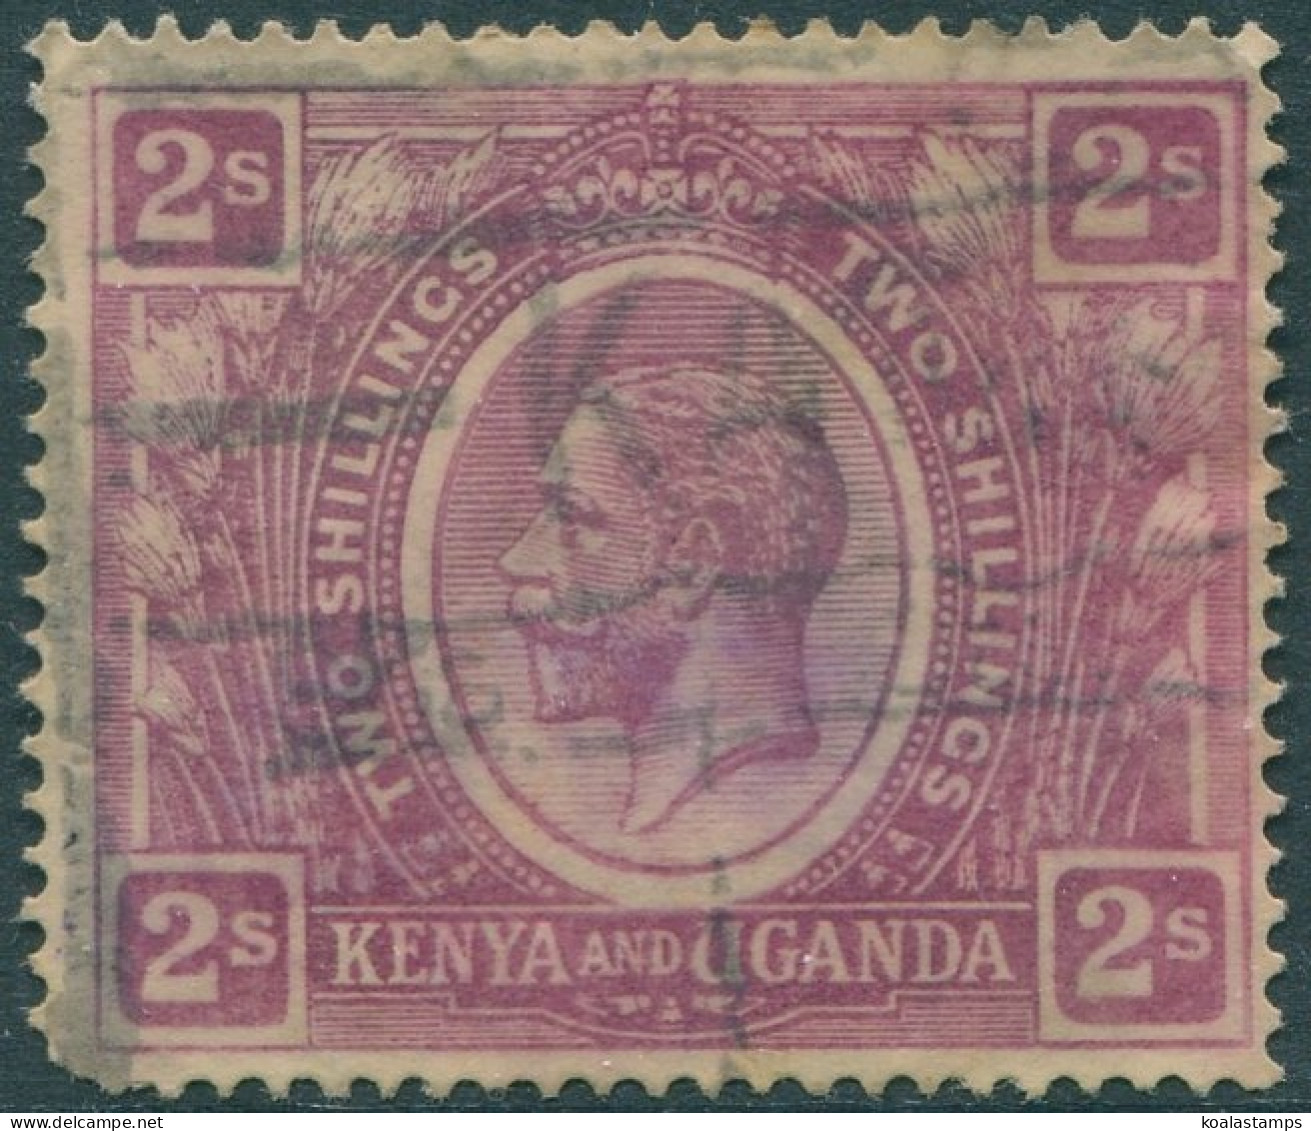 Kenya Uganda And Tanganyika 1922 SG88 2s Dull Purple FU (amd) - Kenya, Ouganda & Tanganyika